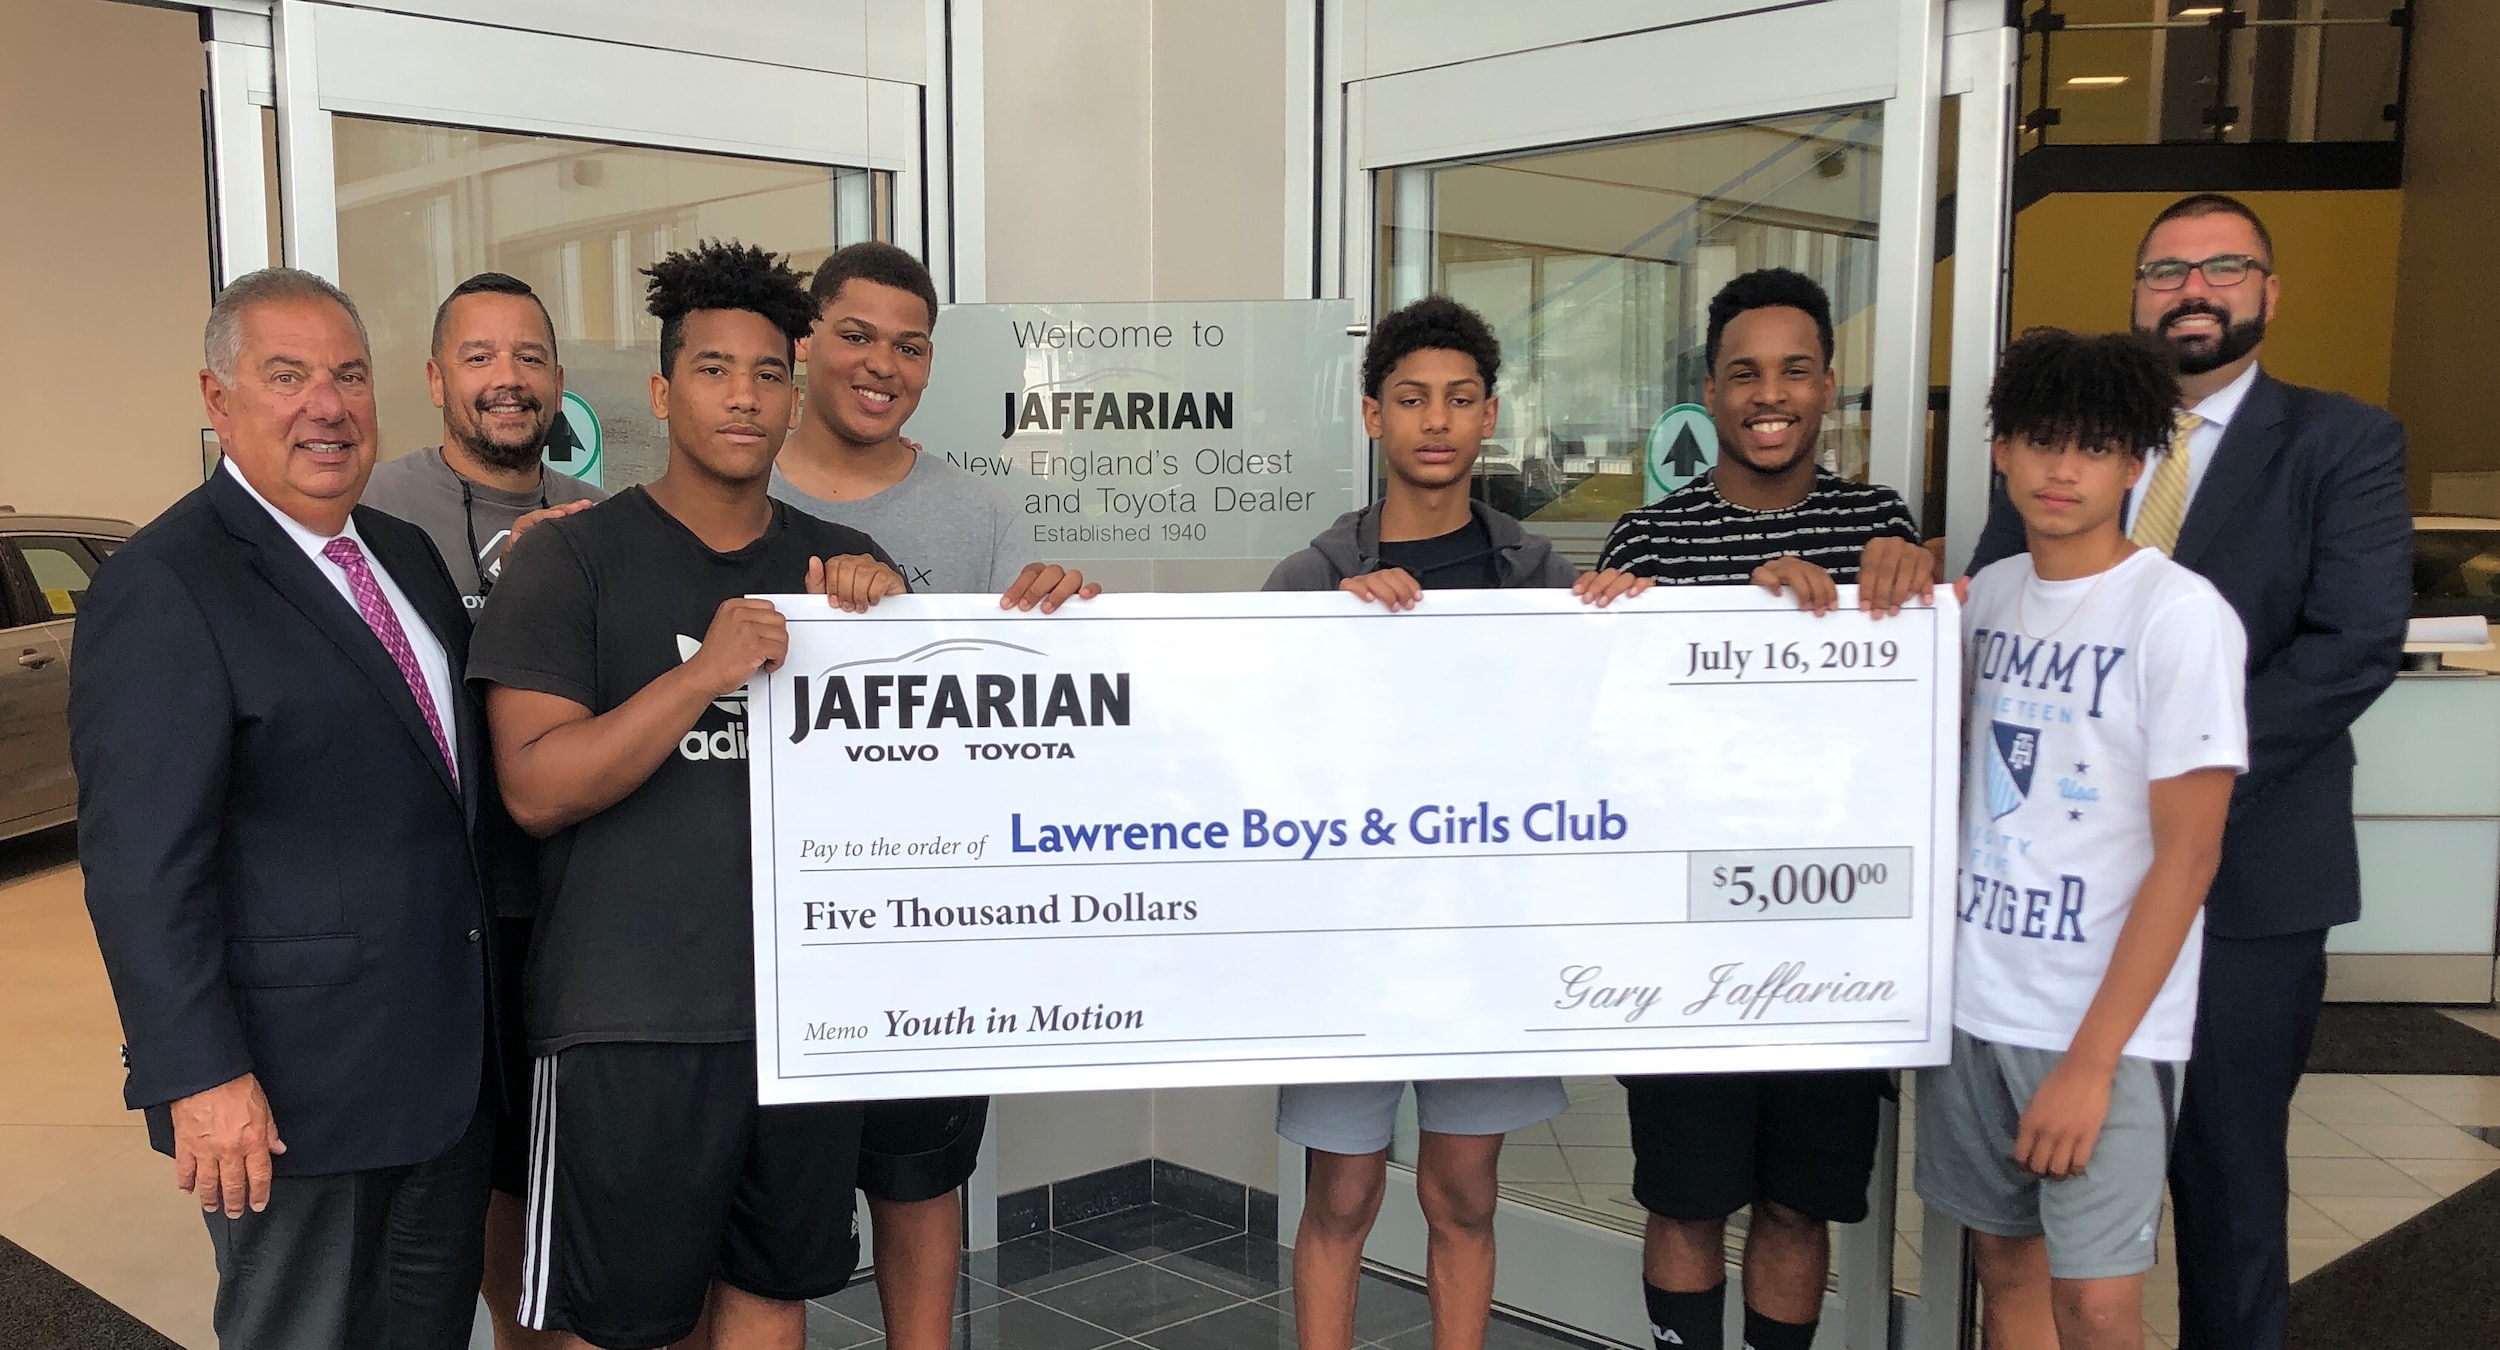 Gary Jaffarian donating a check to Lawrence Boys & Girls Club